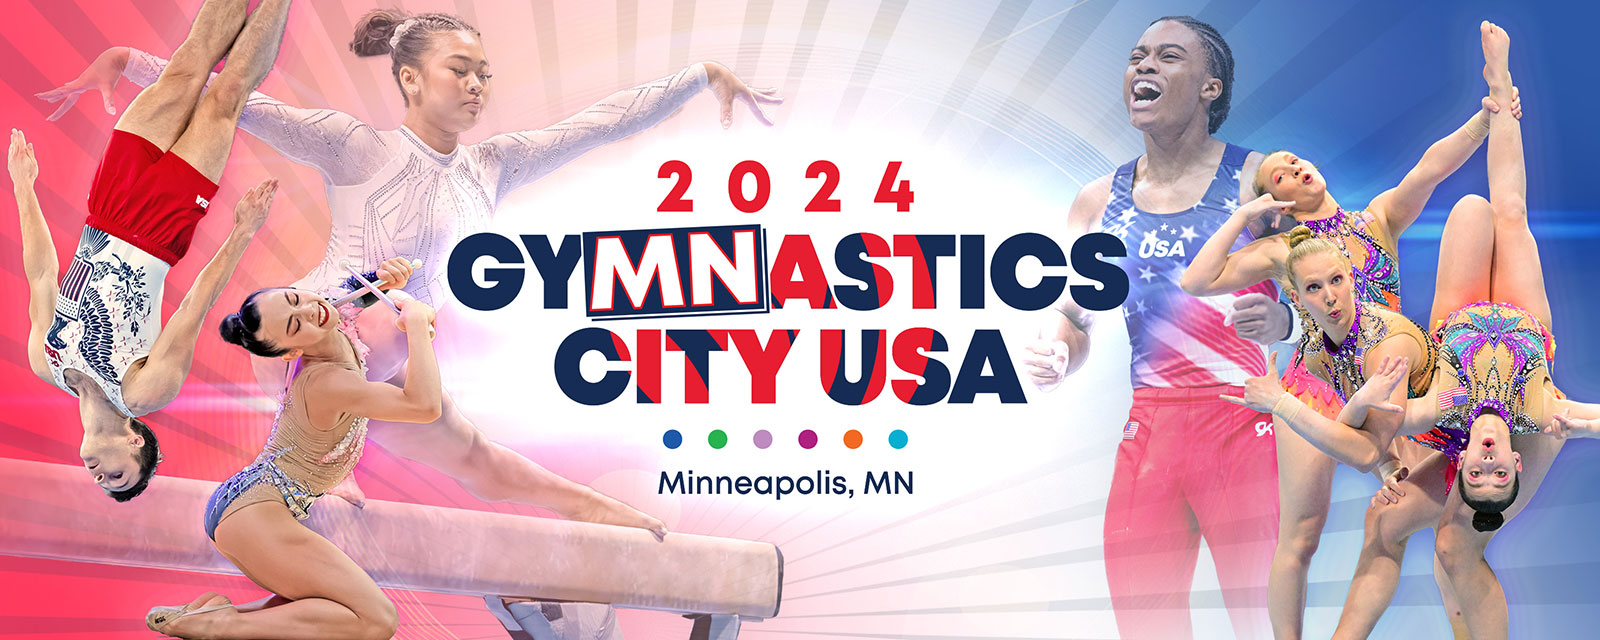 gymnastics city 2024 in minnesota